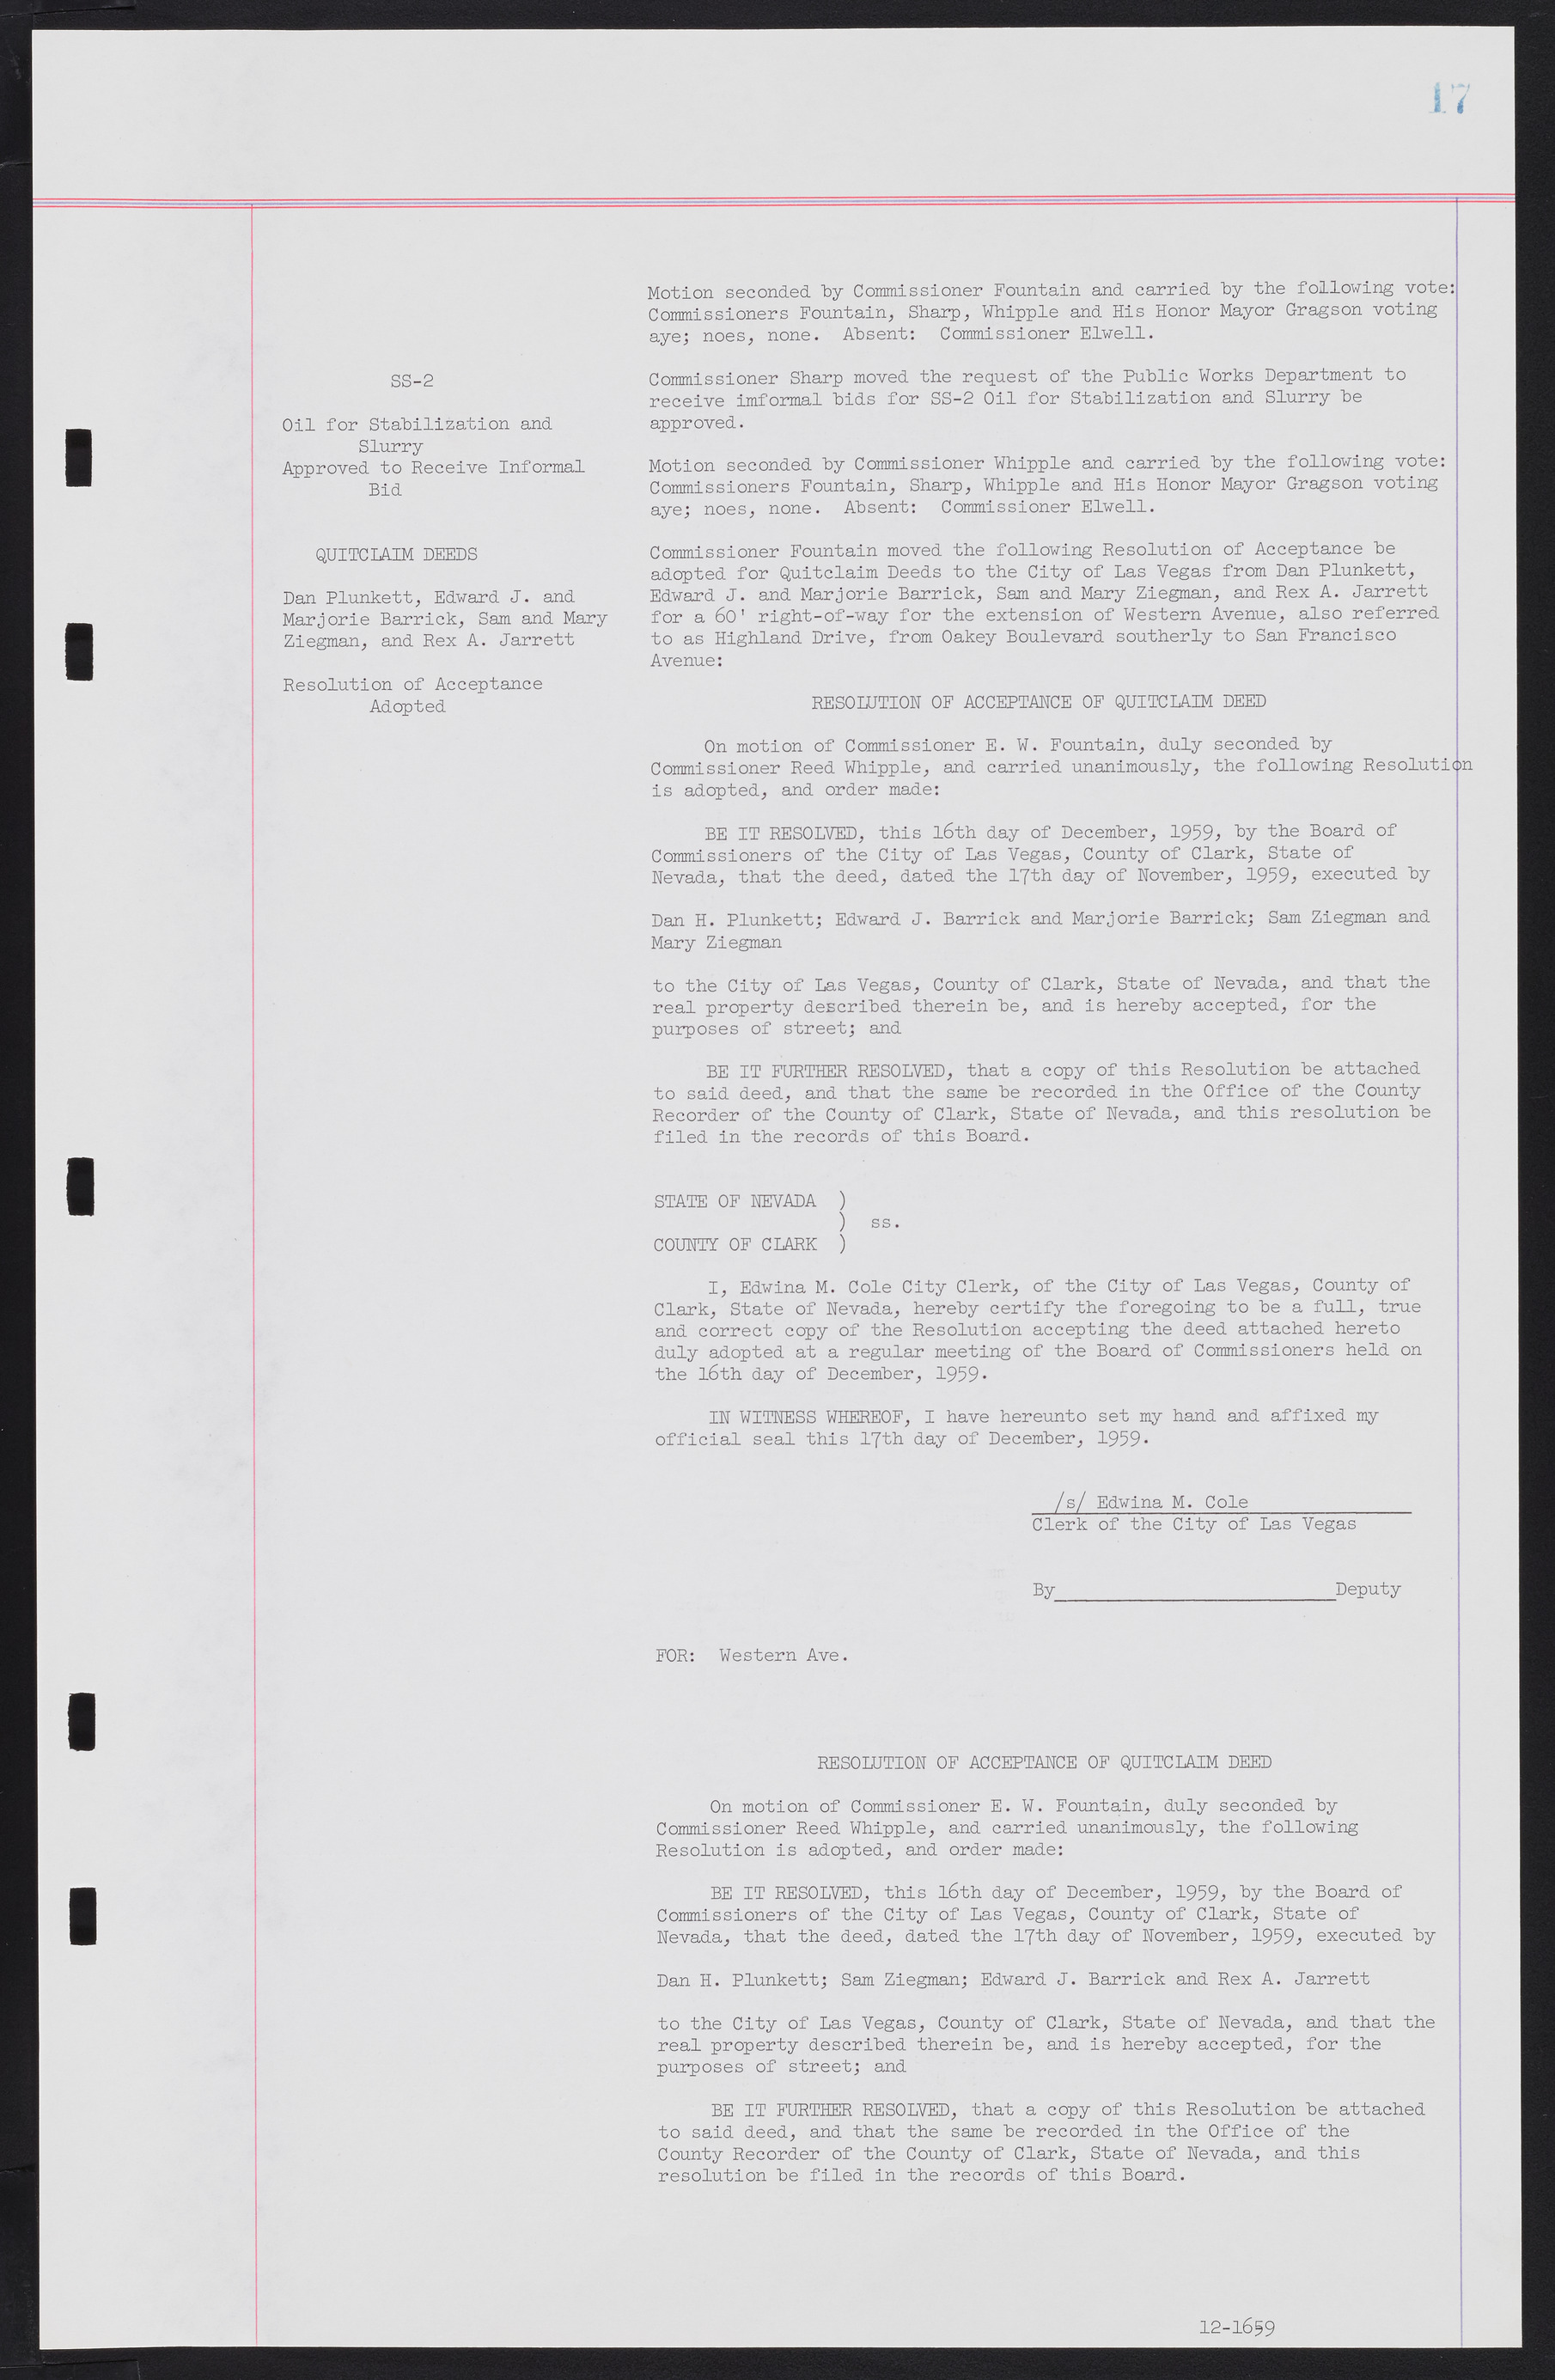 Las Vegas City Commission Minutes, December 8, 1959 to February 17, 1960, lvc000012-21